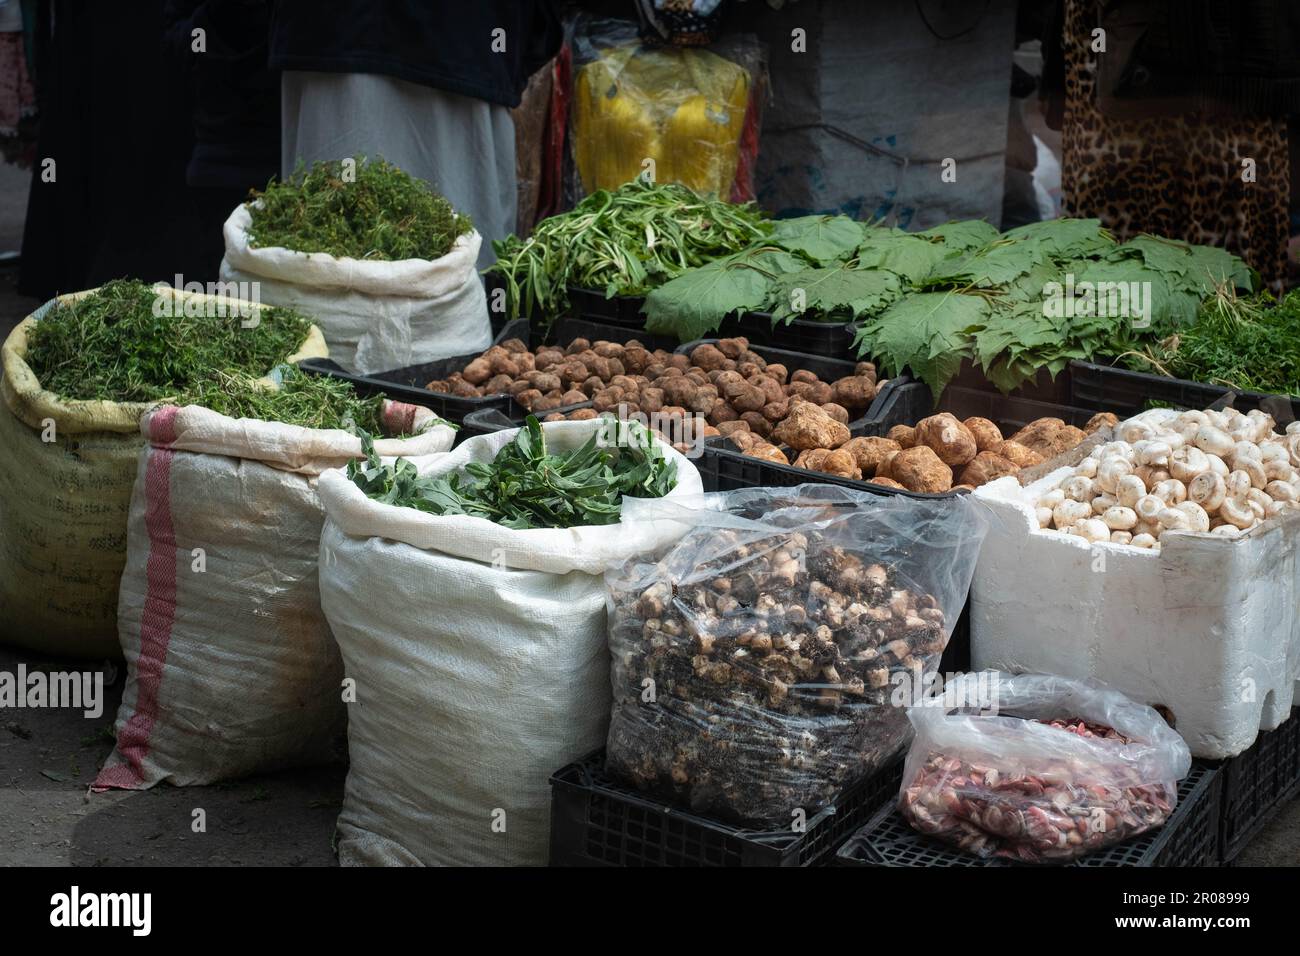 truffle, pile of truffles, mushrooms and herbs on food market Stock Photo